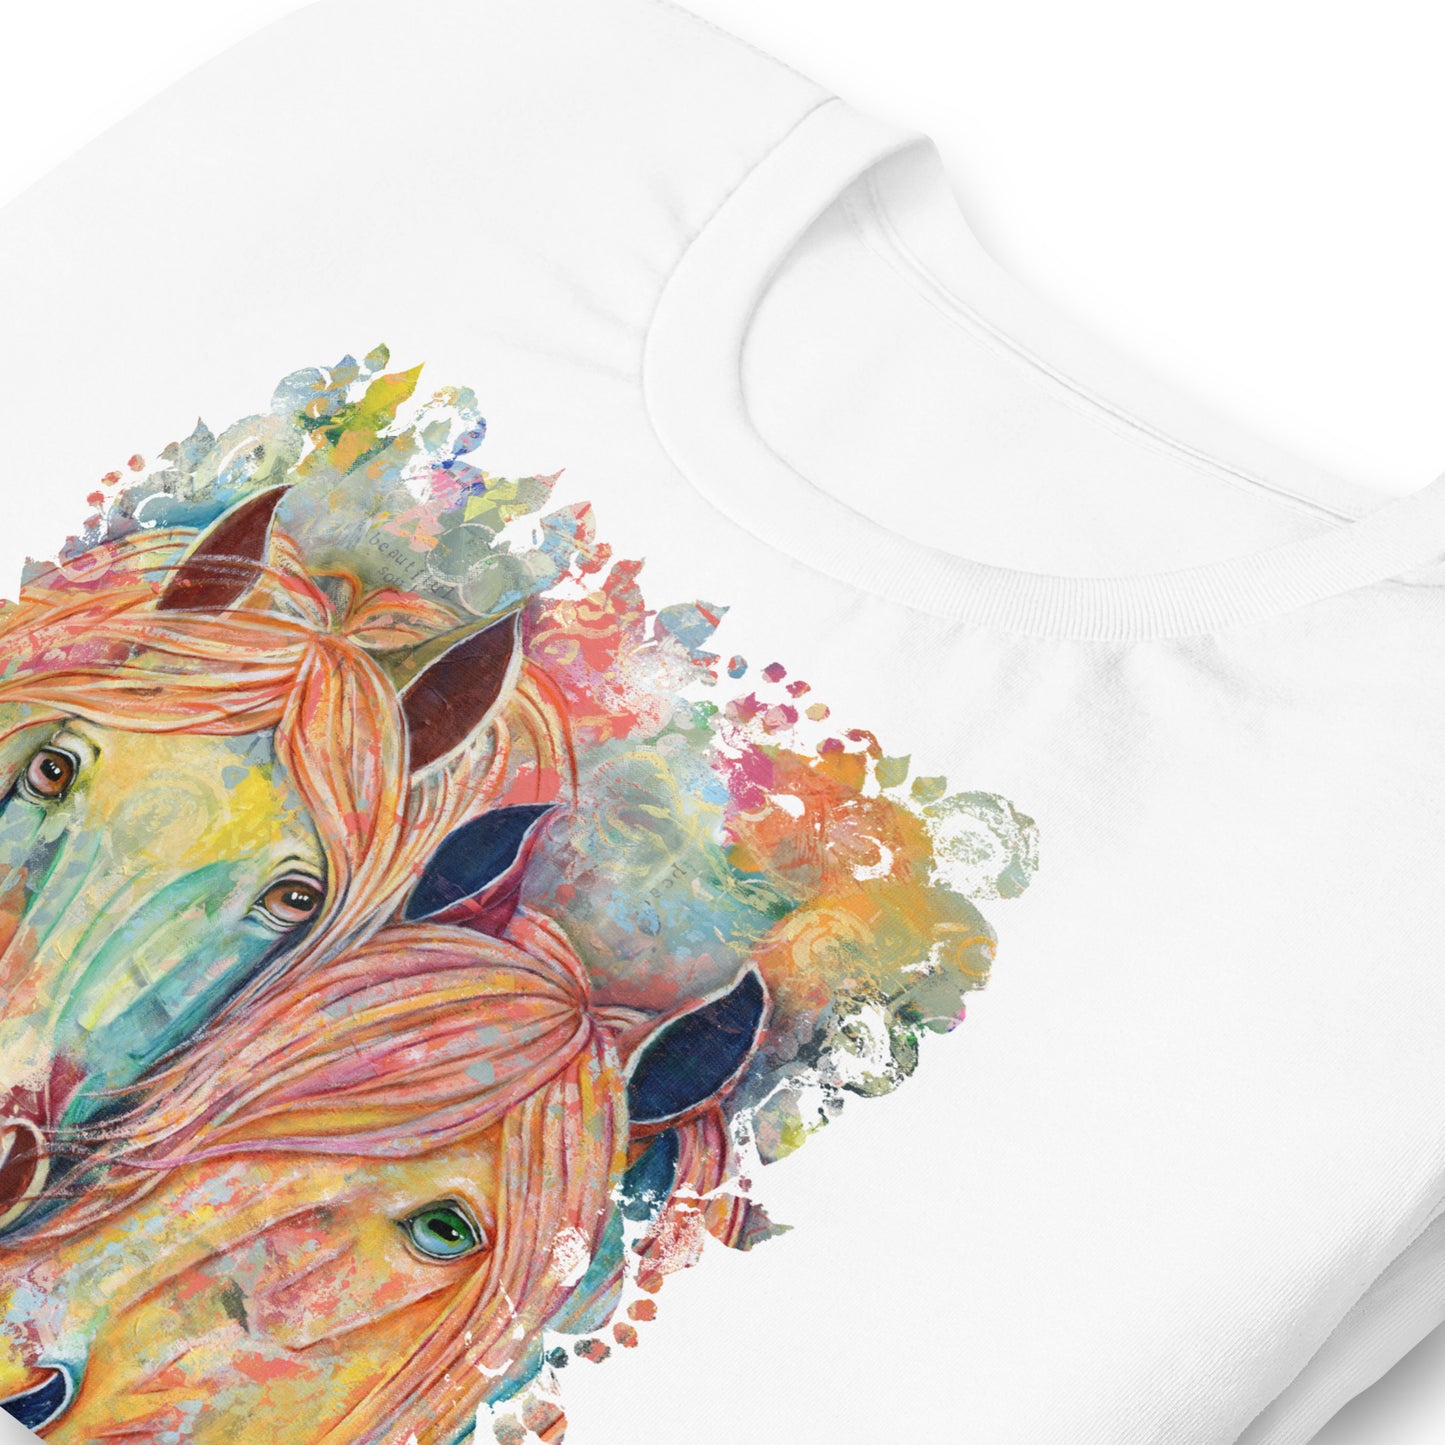 "Seek Harmony" Pony Prints Tee Unisex T-Shirt